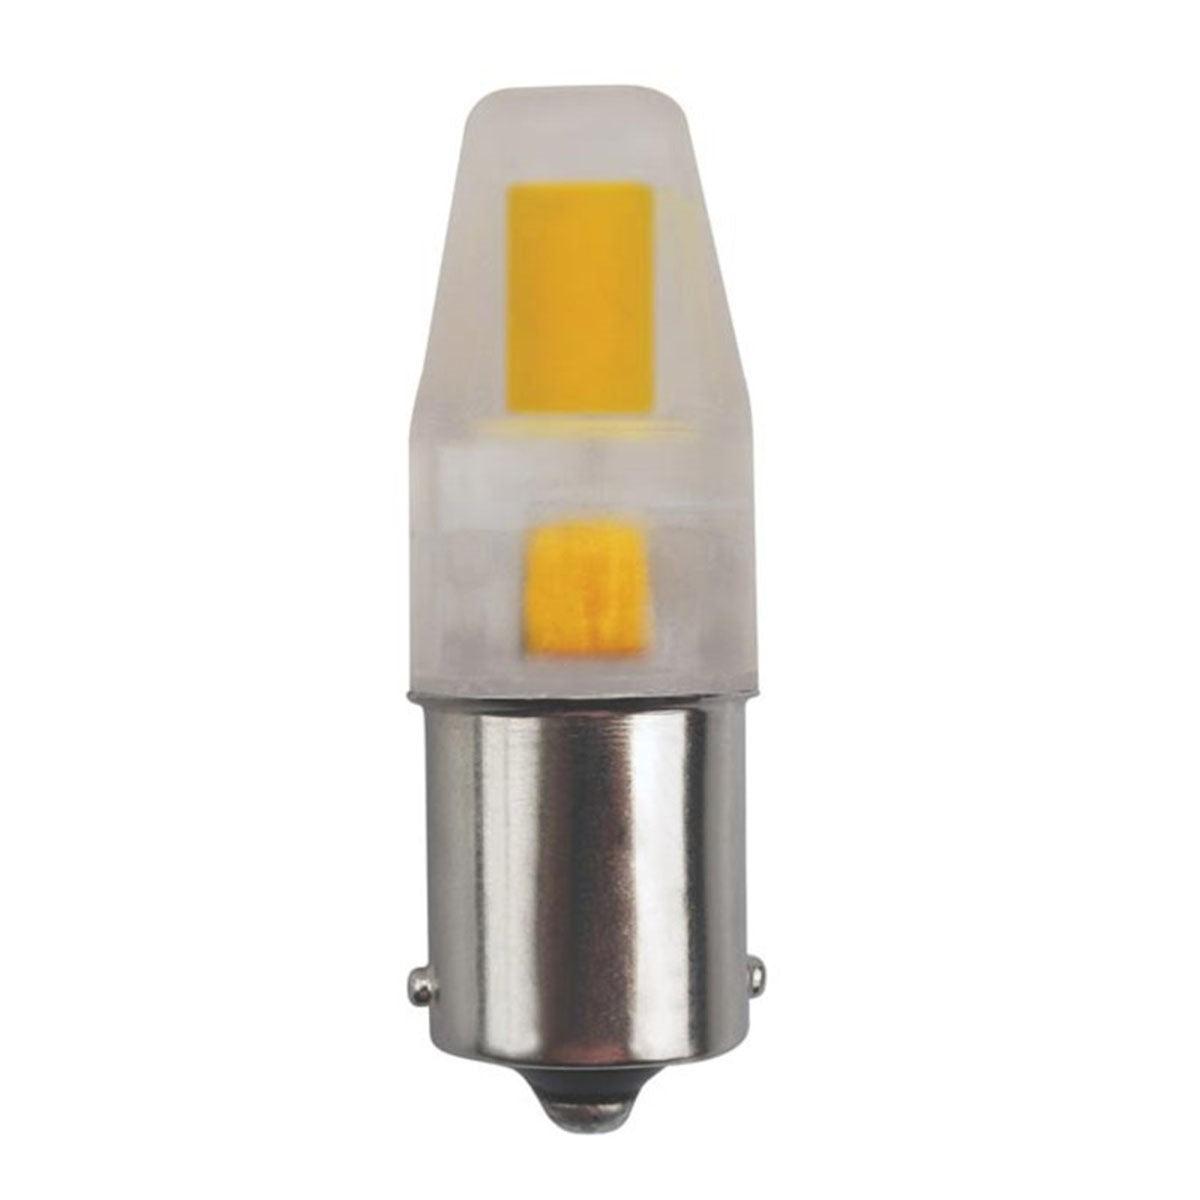 T4 Mini LED Bulb, 3 Watt, 330 Lumens, 3000K, BA15s Single Bayonet Base, Clear Finish